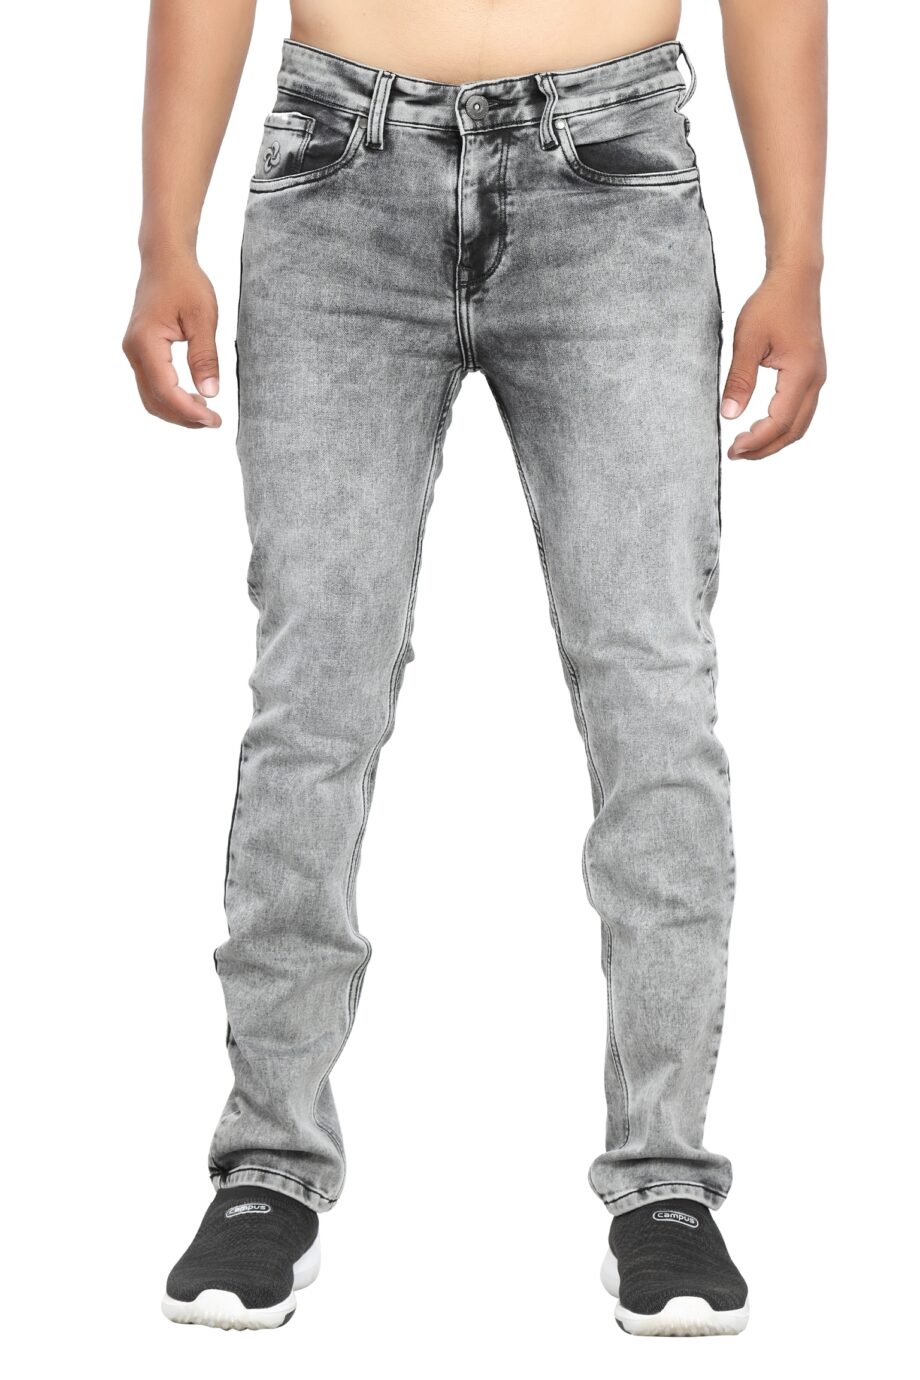 Stretchable branded Grey jeans for men